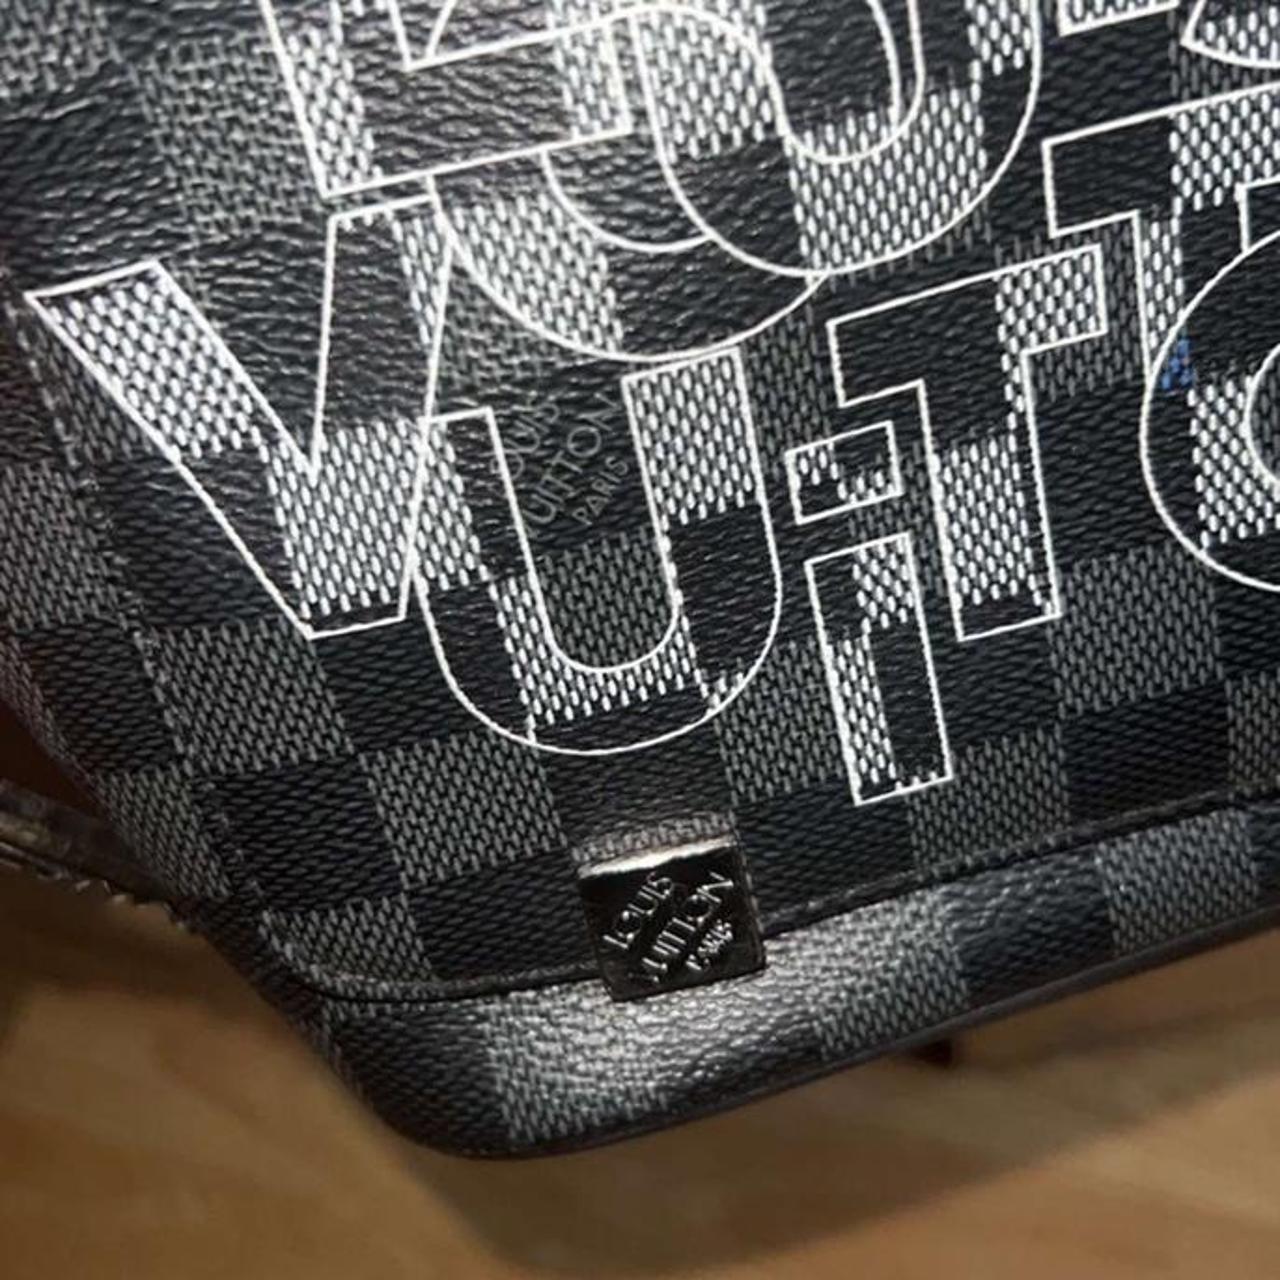 Louis Vuitton messenger bag Visible signs of use but - Depop